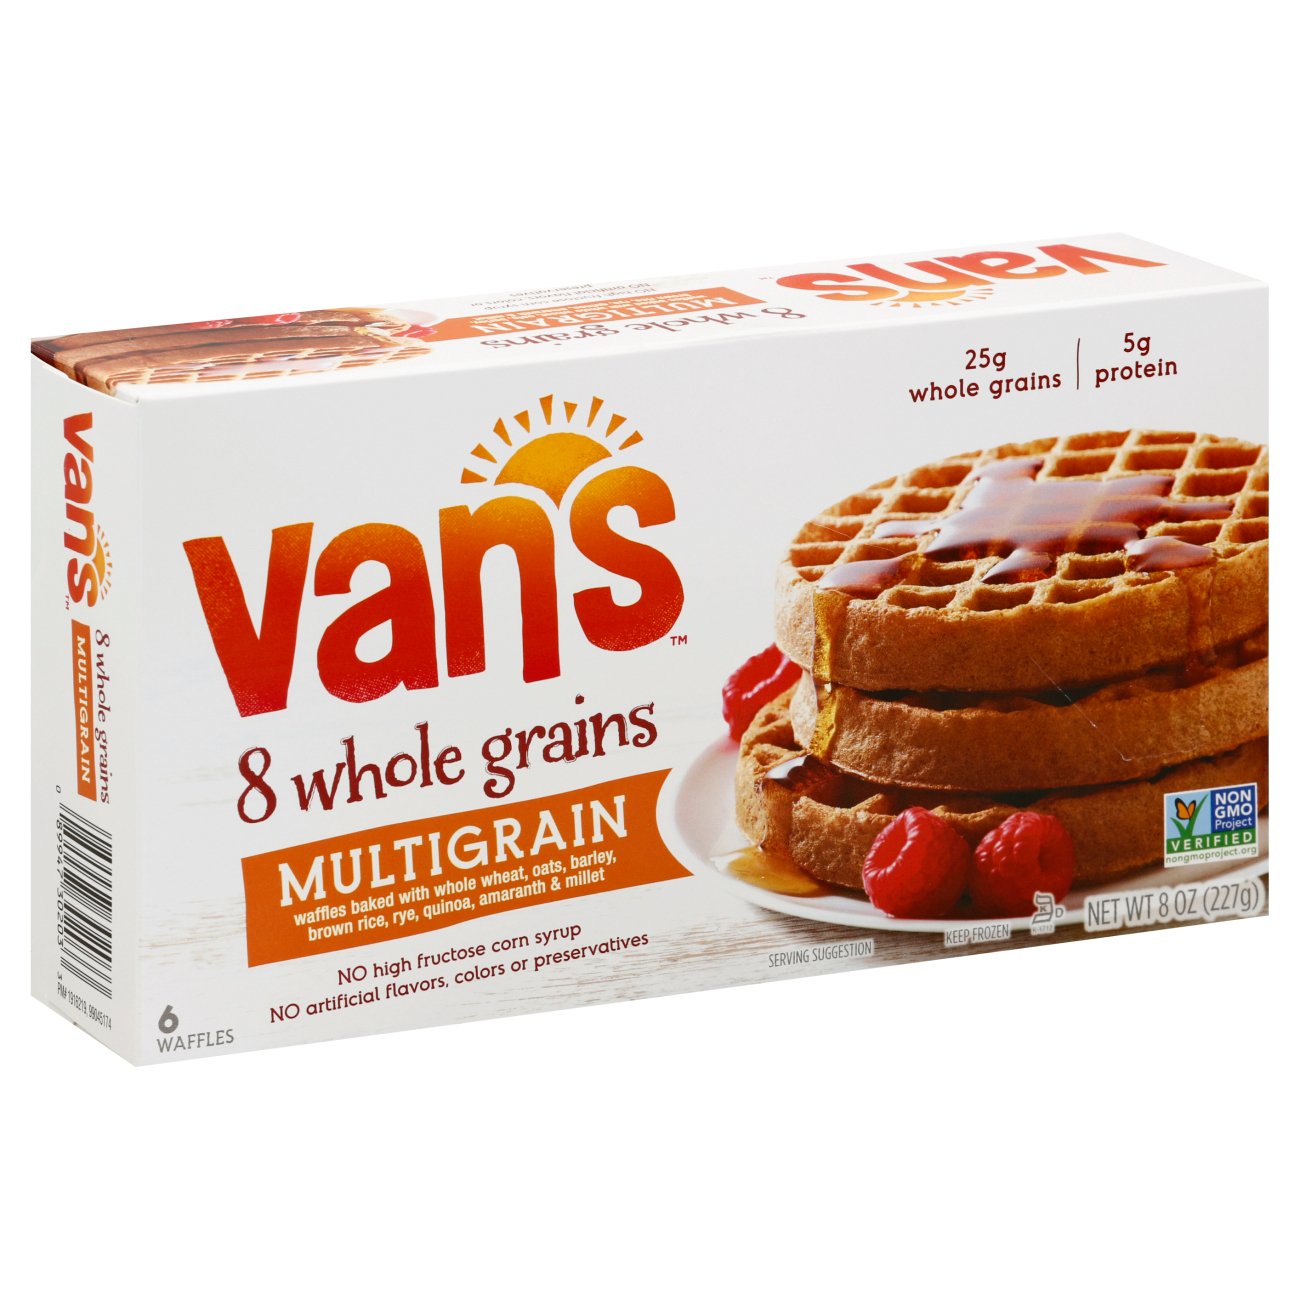 Van's Multigrain 8-Whole-Grain Waffles 